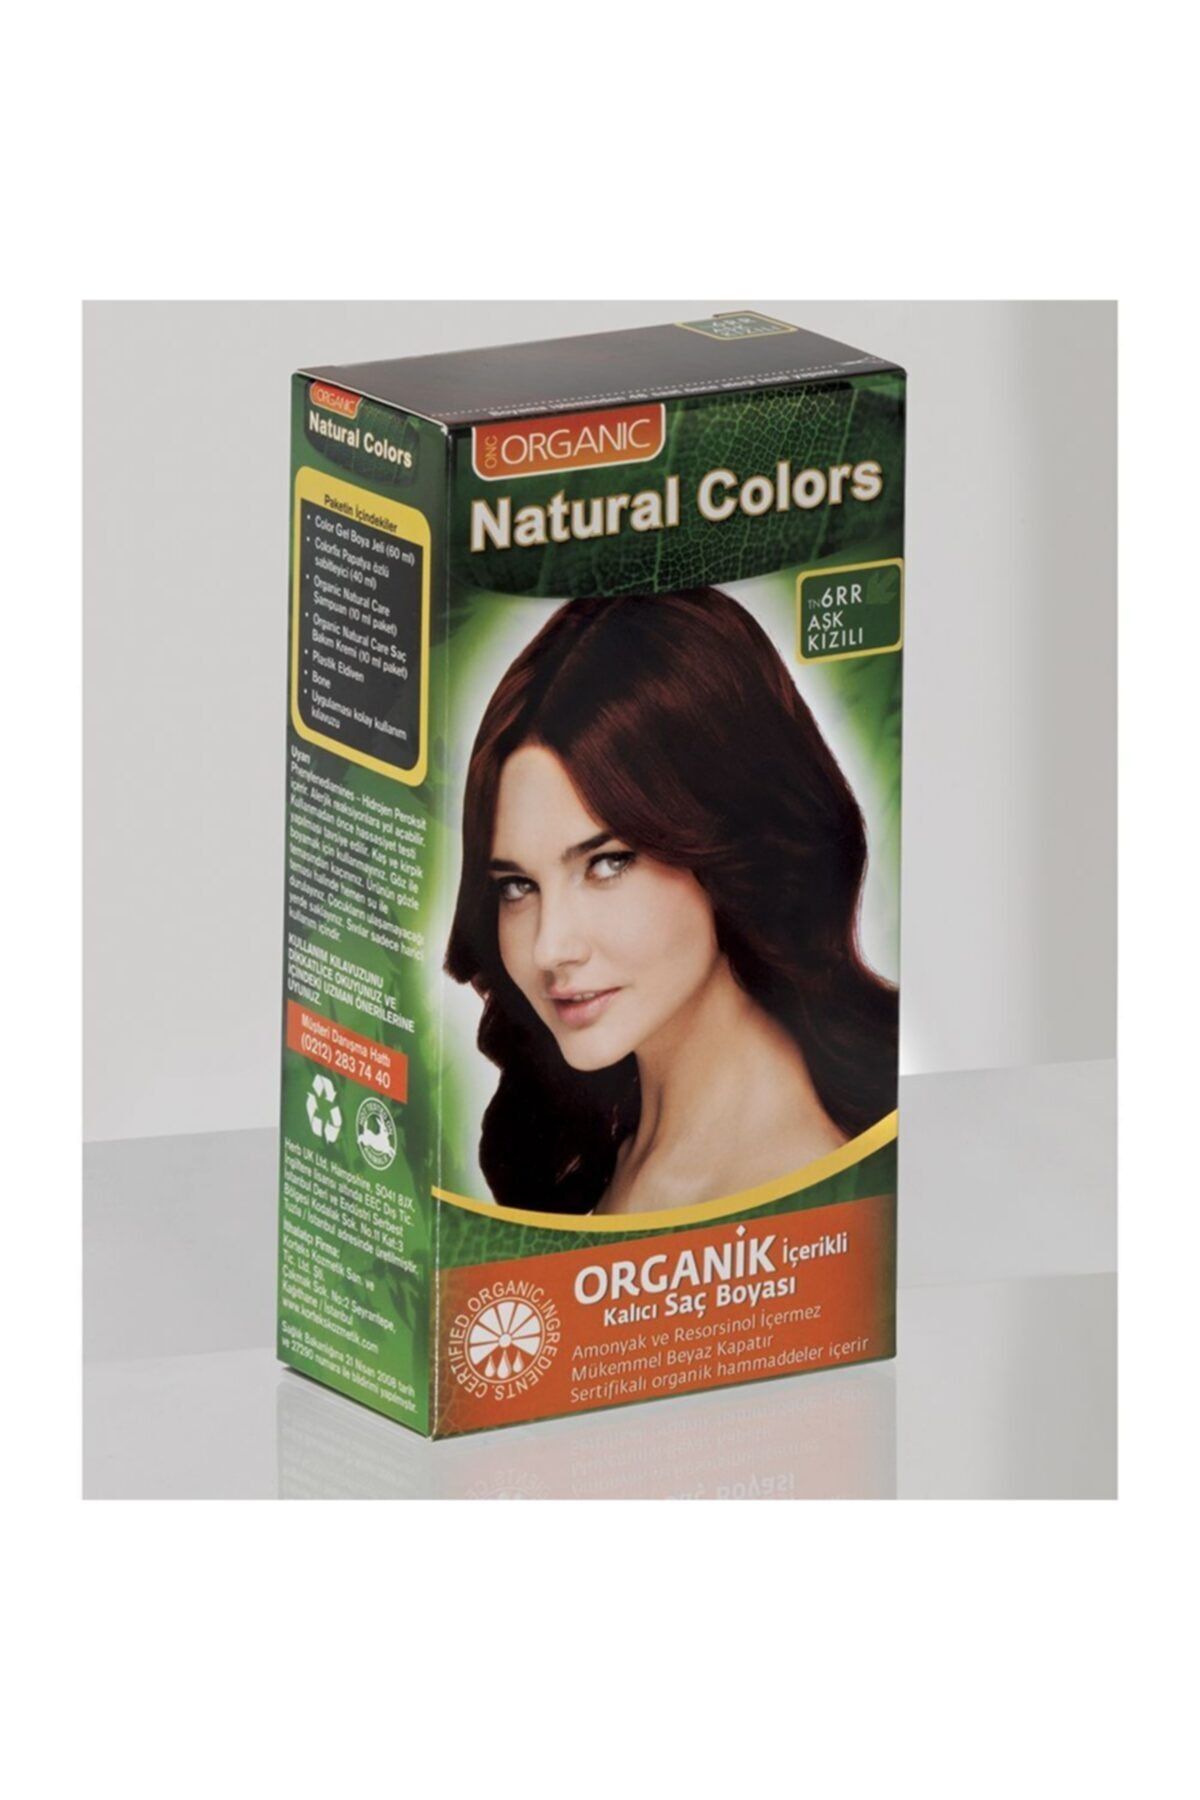 Organic Natural Colors Natural Colors 6rr Alev Kızılı Organik Saç Boyası